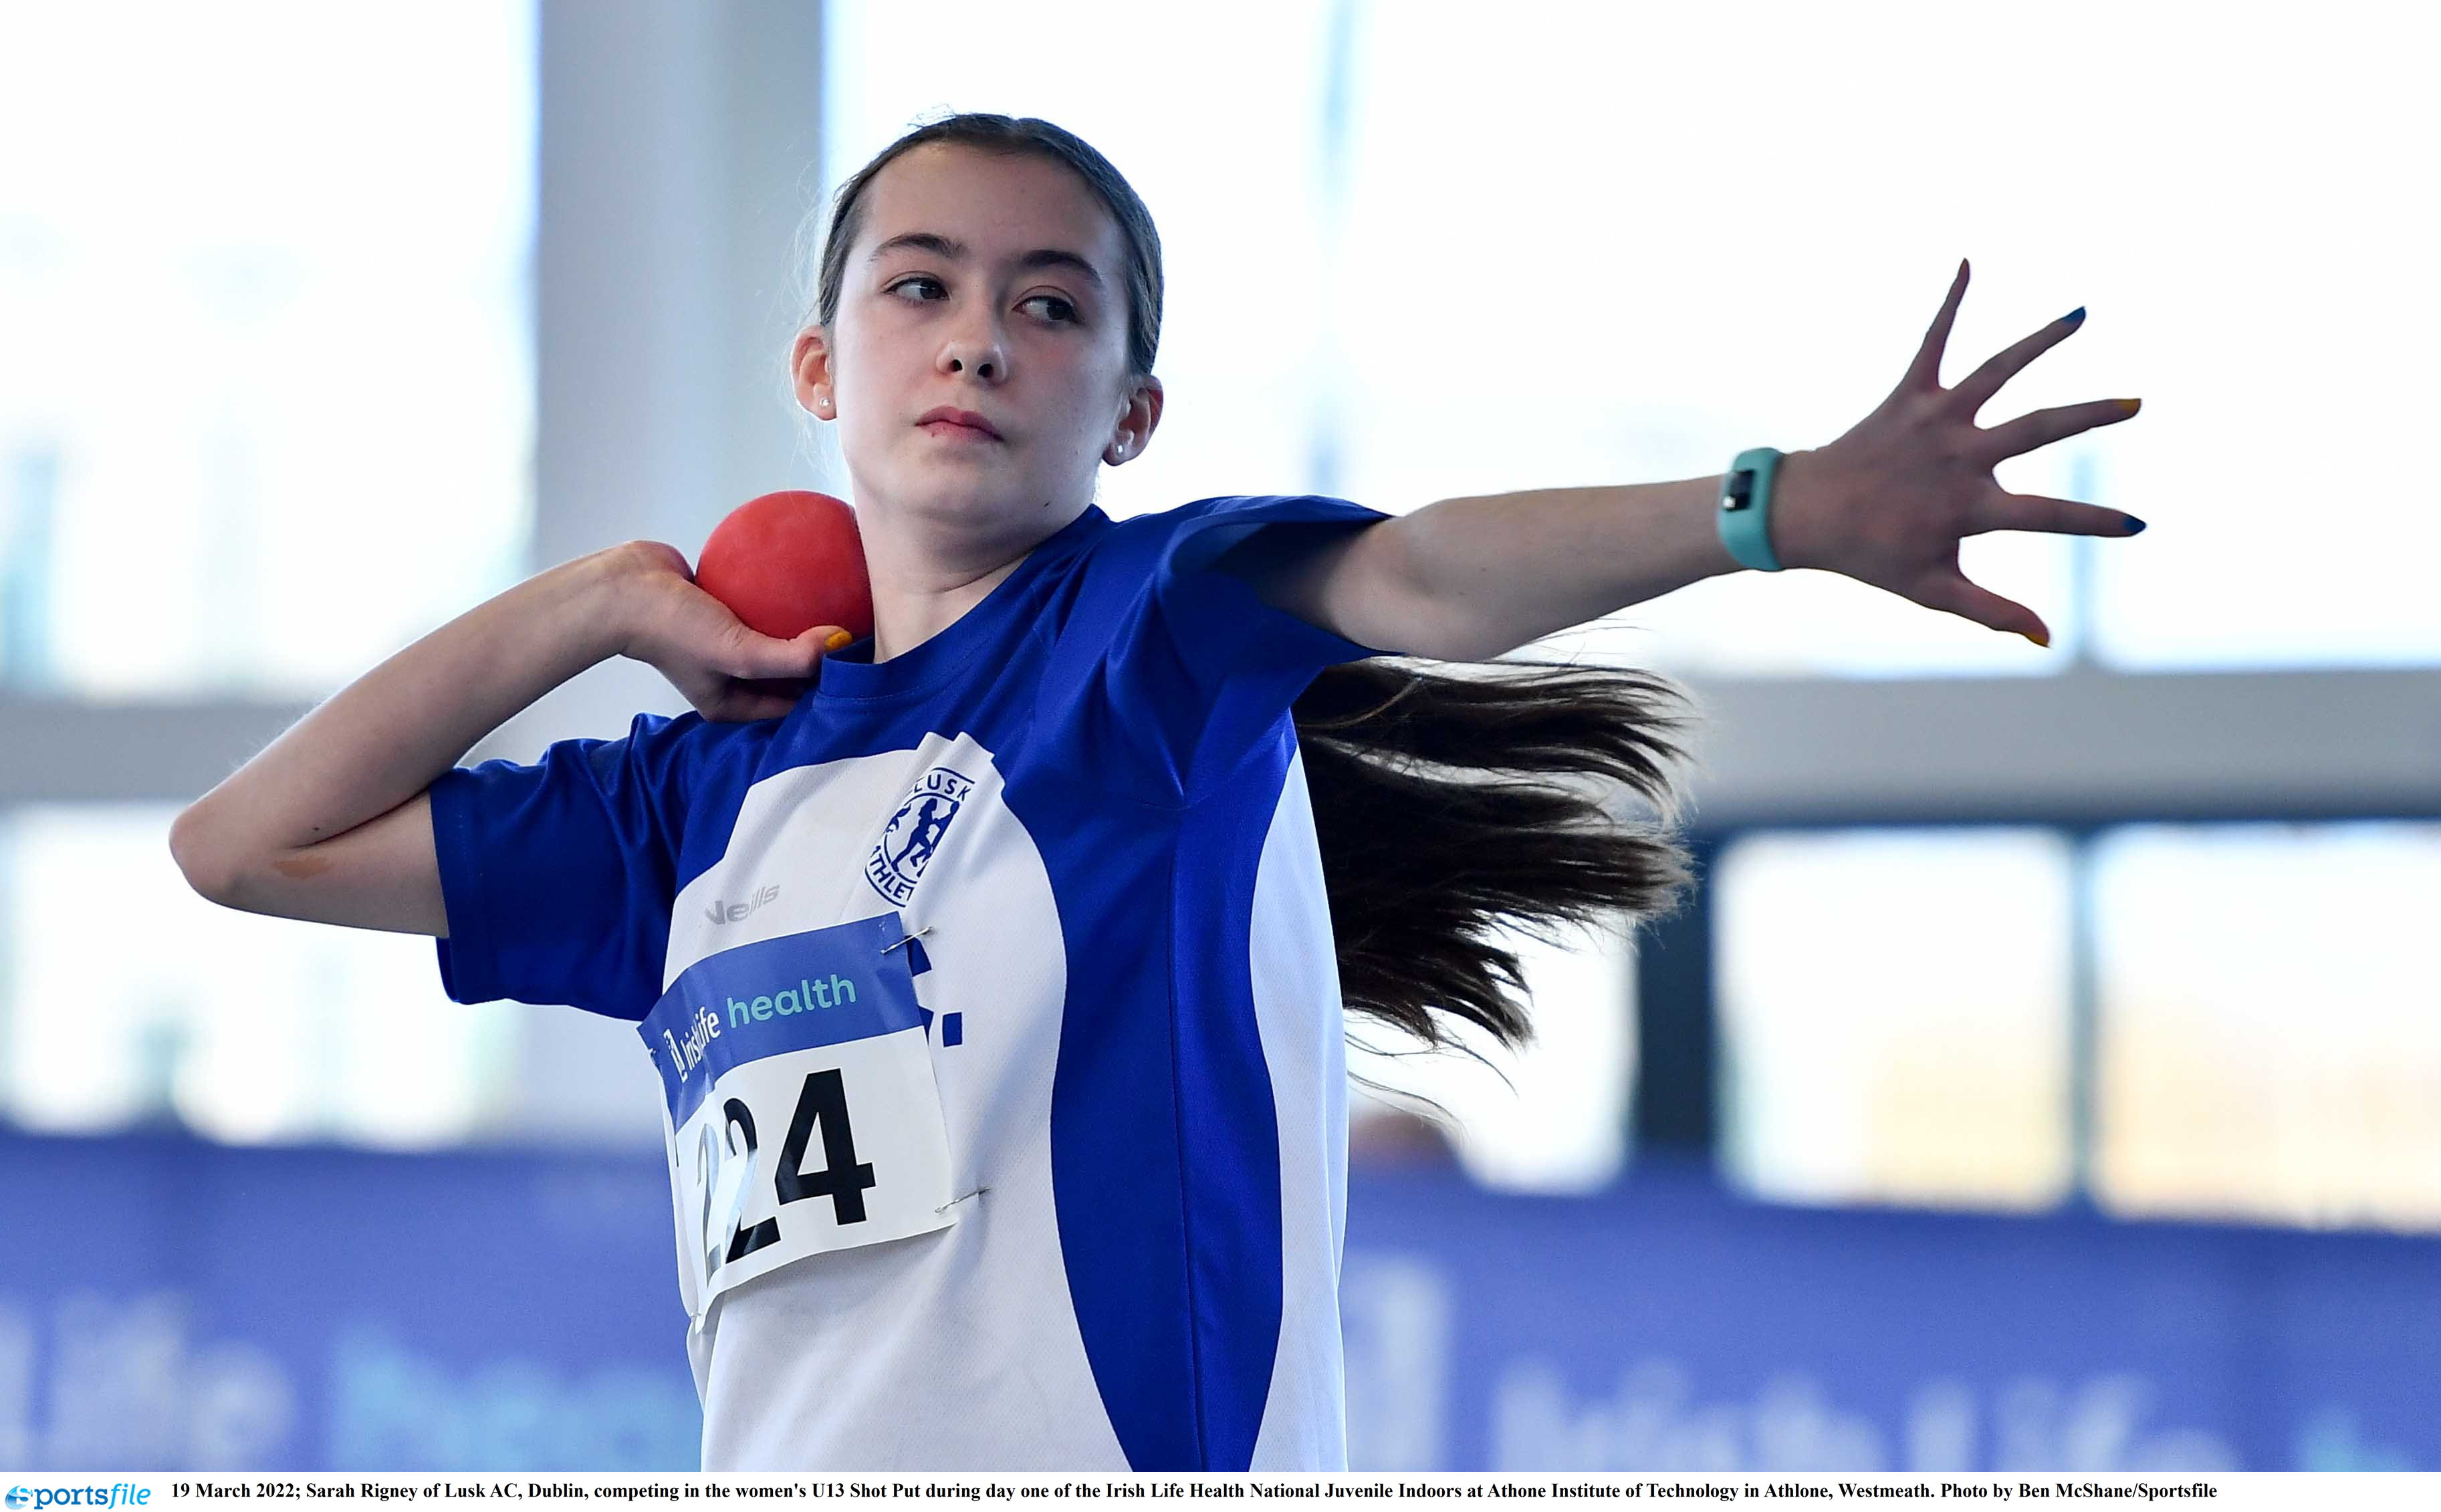 Irish Life Health National Juvenile Championships set to end the Indoor Season with a BANG